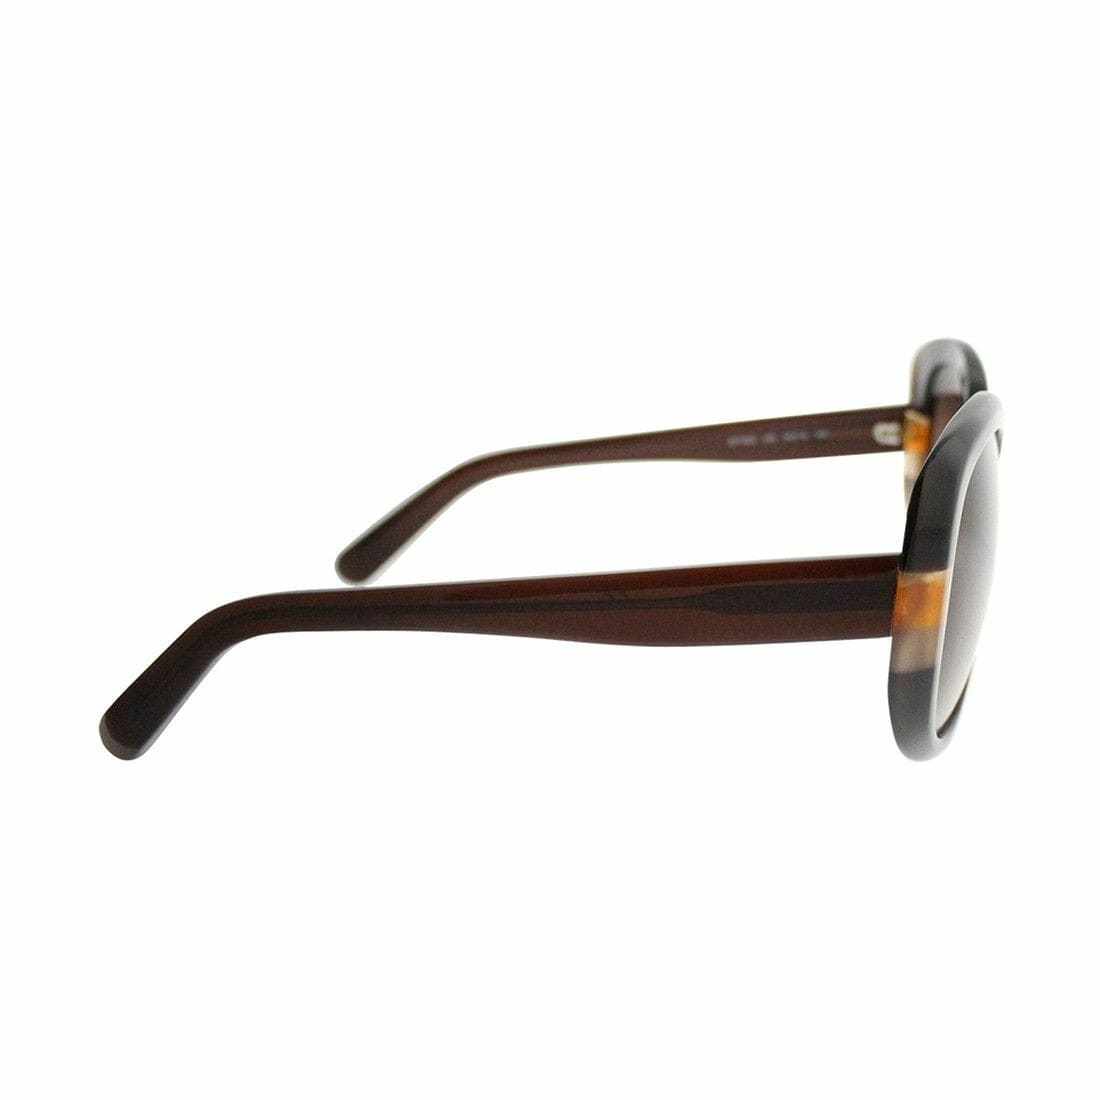 Salvatore Ferragamo SF793S-230 Brown Orange Butterfly Grey Lens Women's Sunglasses 886895237222